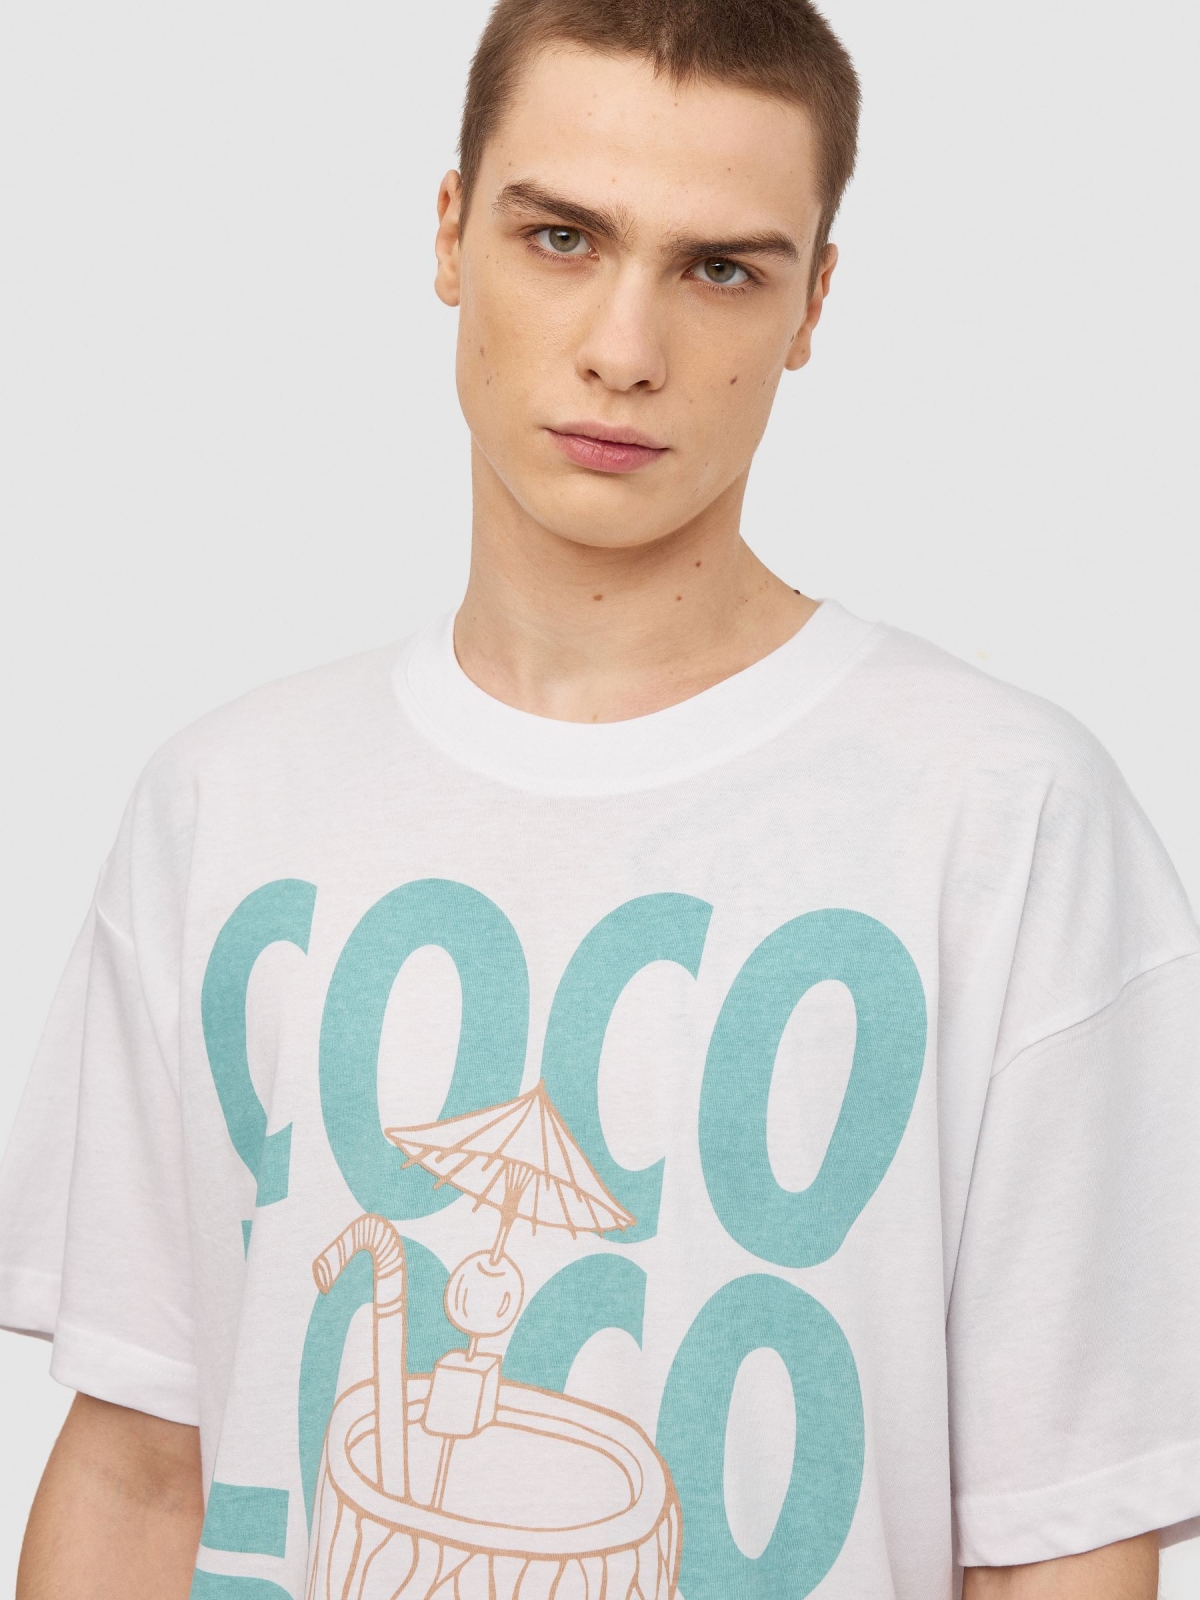 Coco Loco T-shirt white detail view